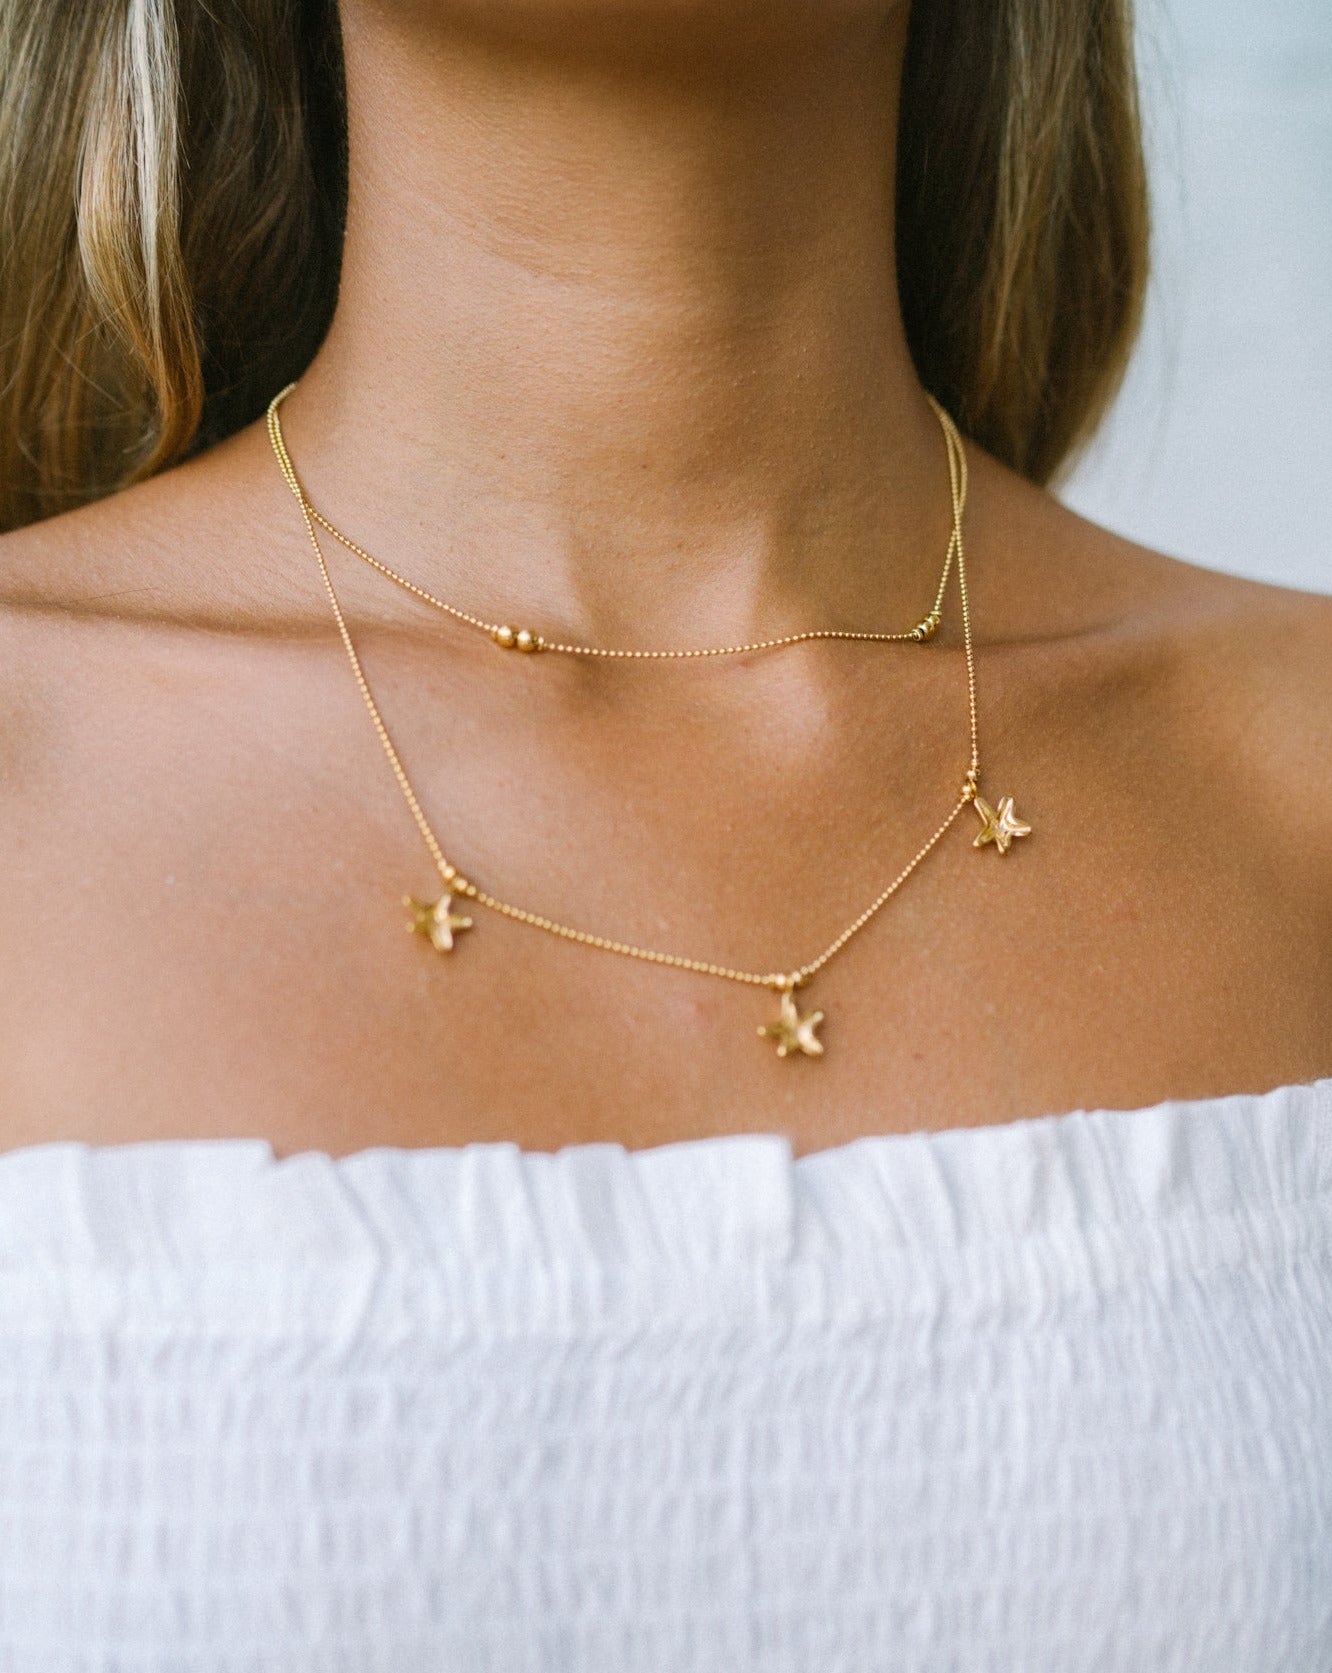 Starla Gold Starfish Layered Necklace